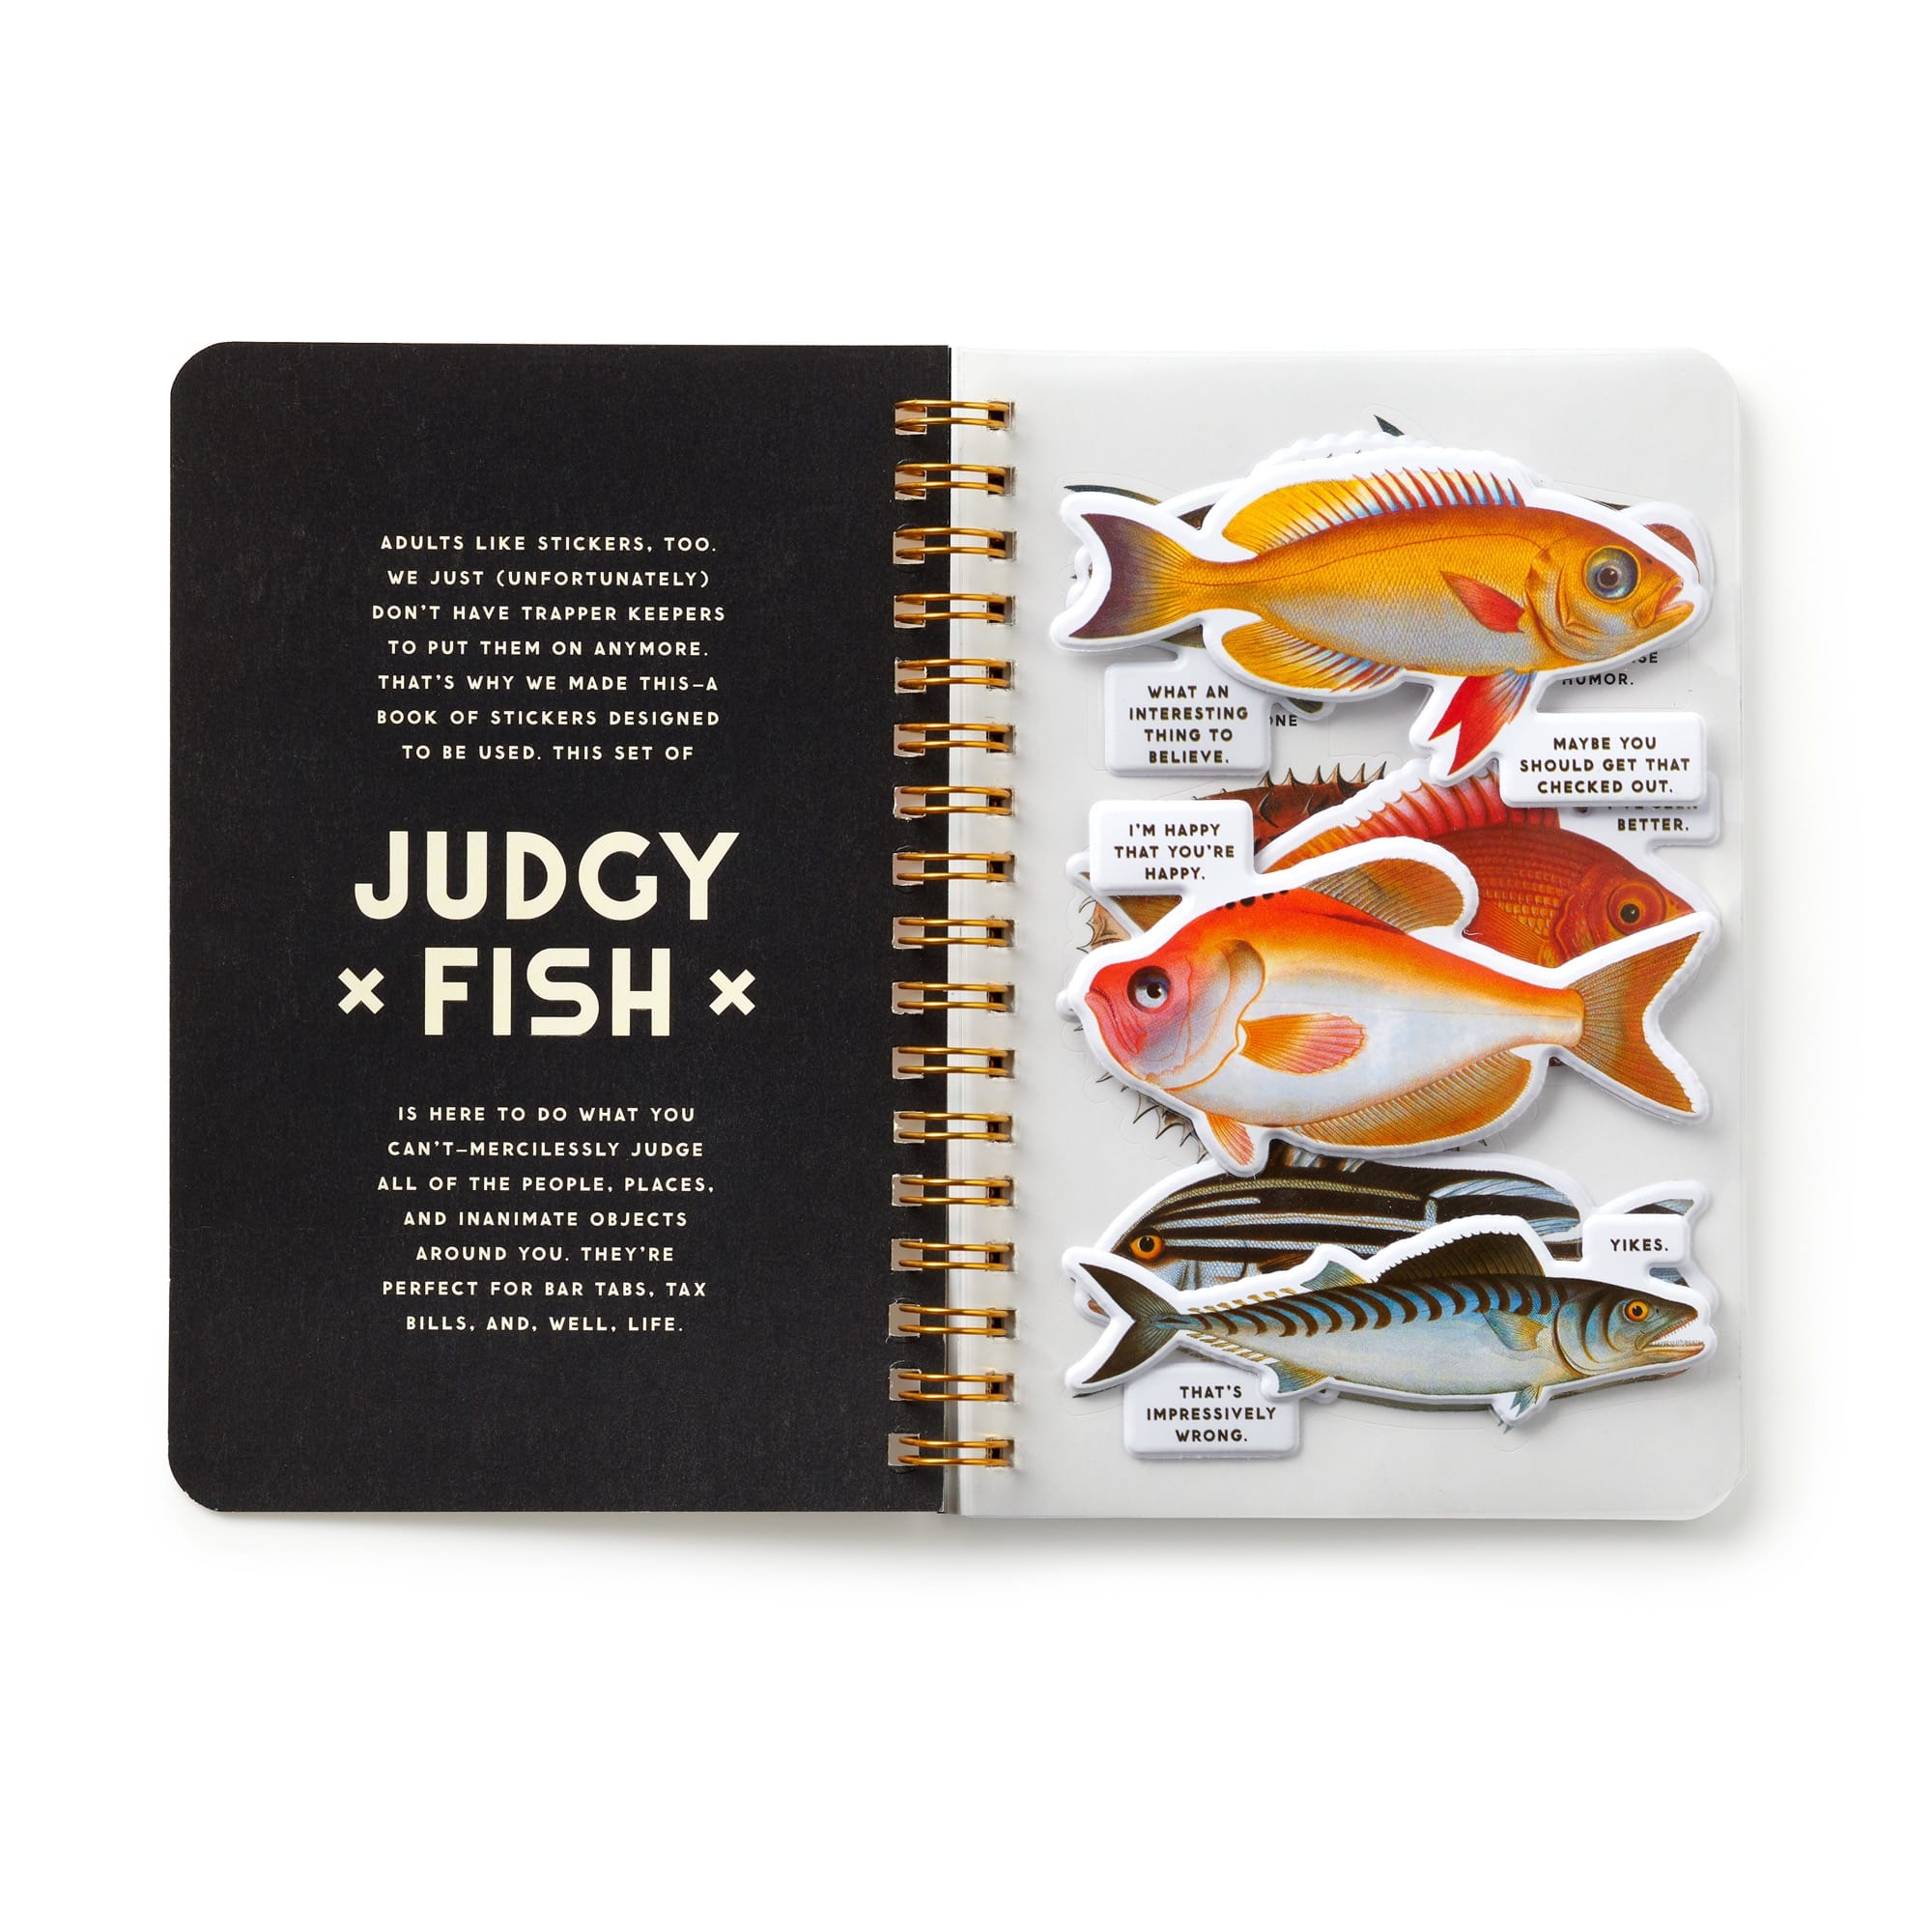 Judgy Fish Sticker Book [Book]